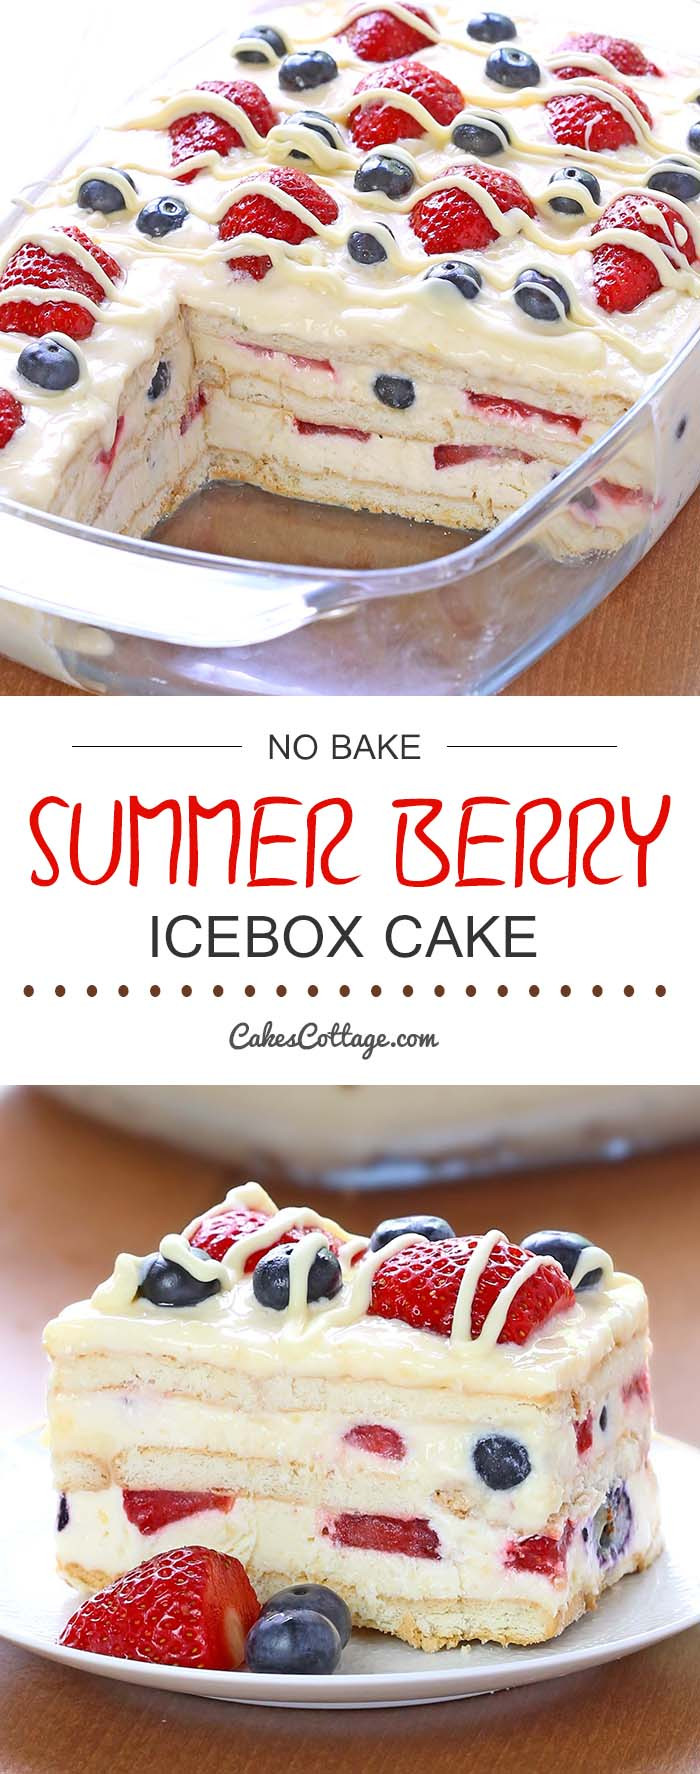 Easy No Bake Summer Desserts
 No Bake Summer Berry Icebox Cake Cakescottage